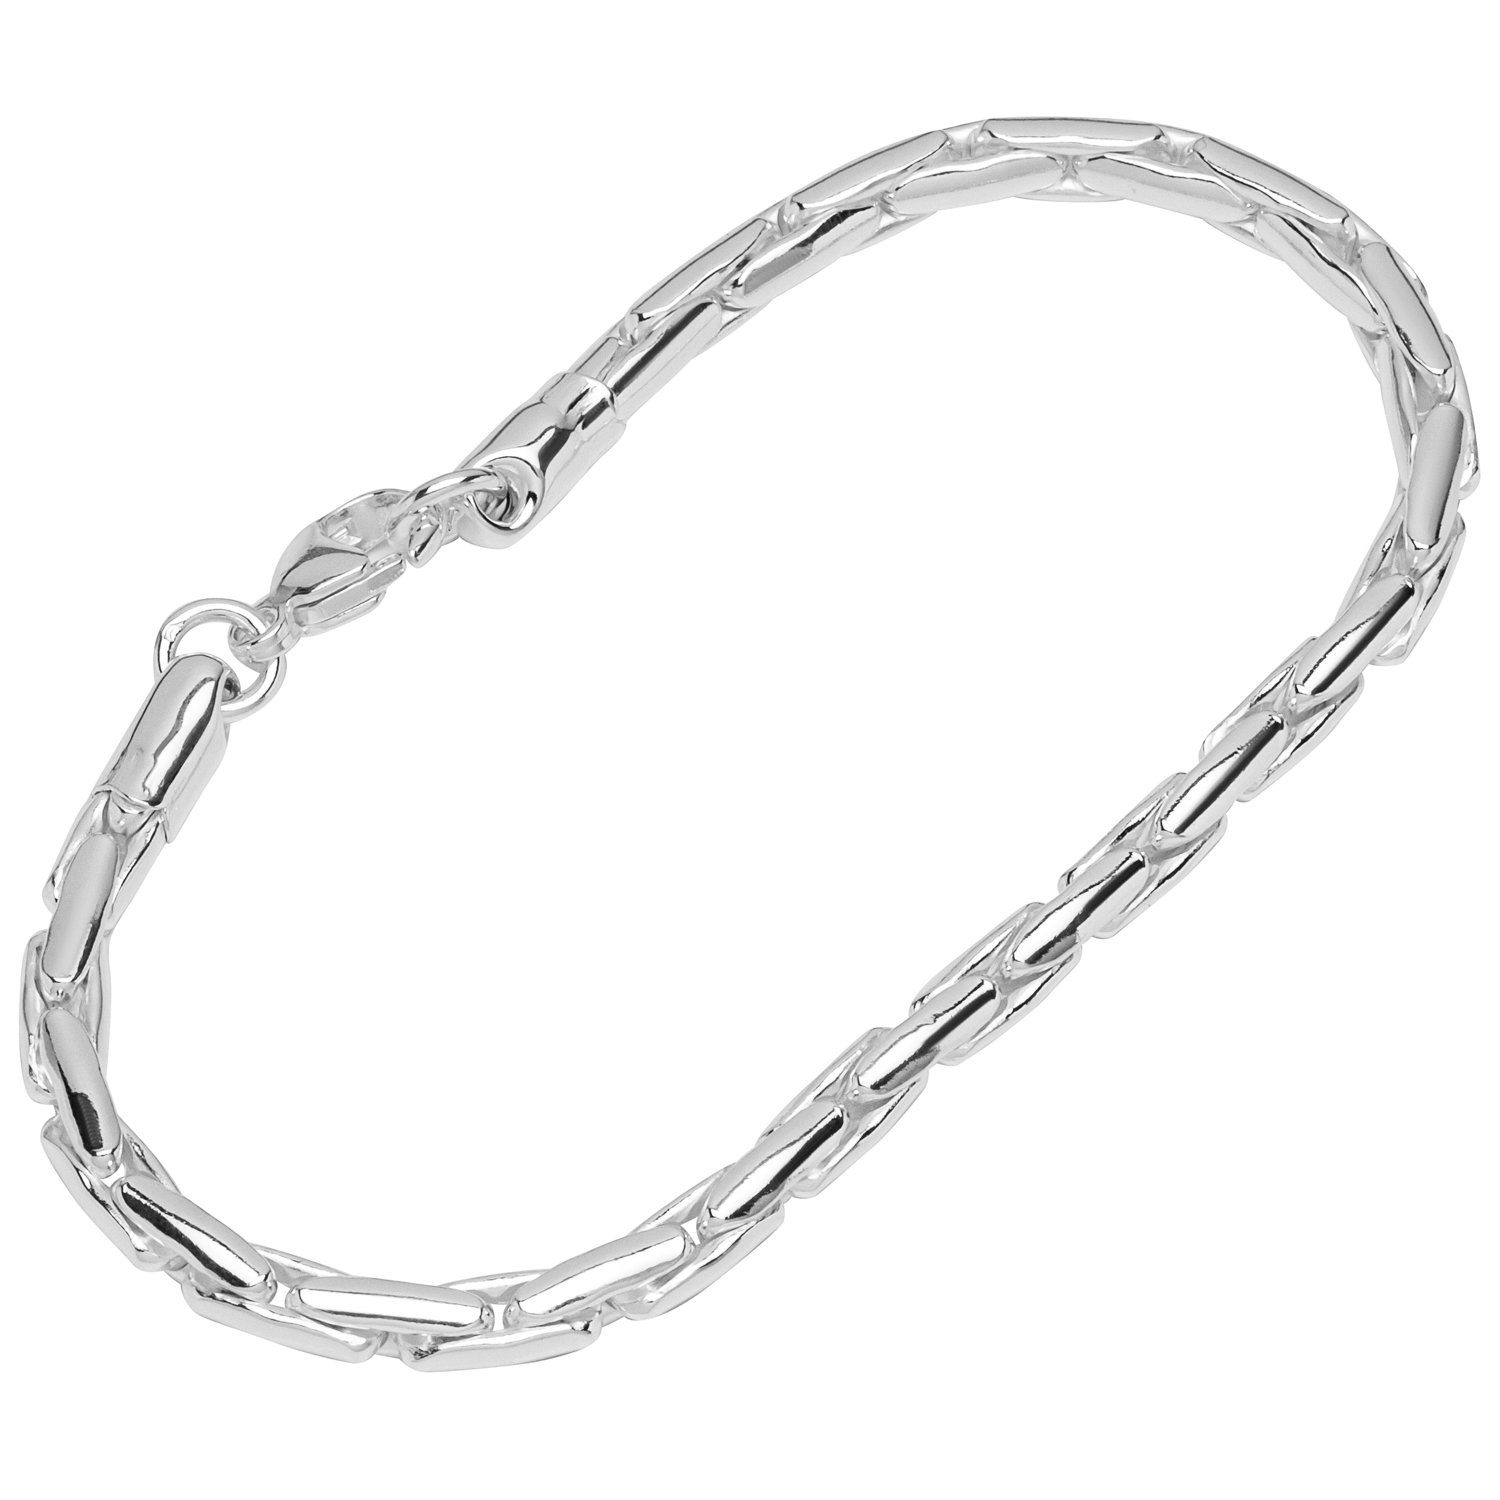 NKlaus Silberarmband Armband 925 Sterling Silber 21cm Ankerkette rund g (1 Stück), Made in Germany | Silberarmbänder